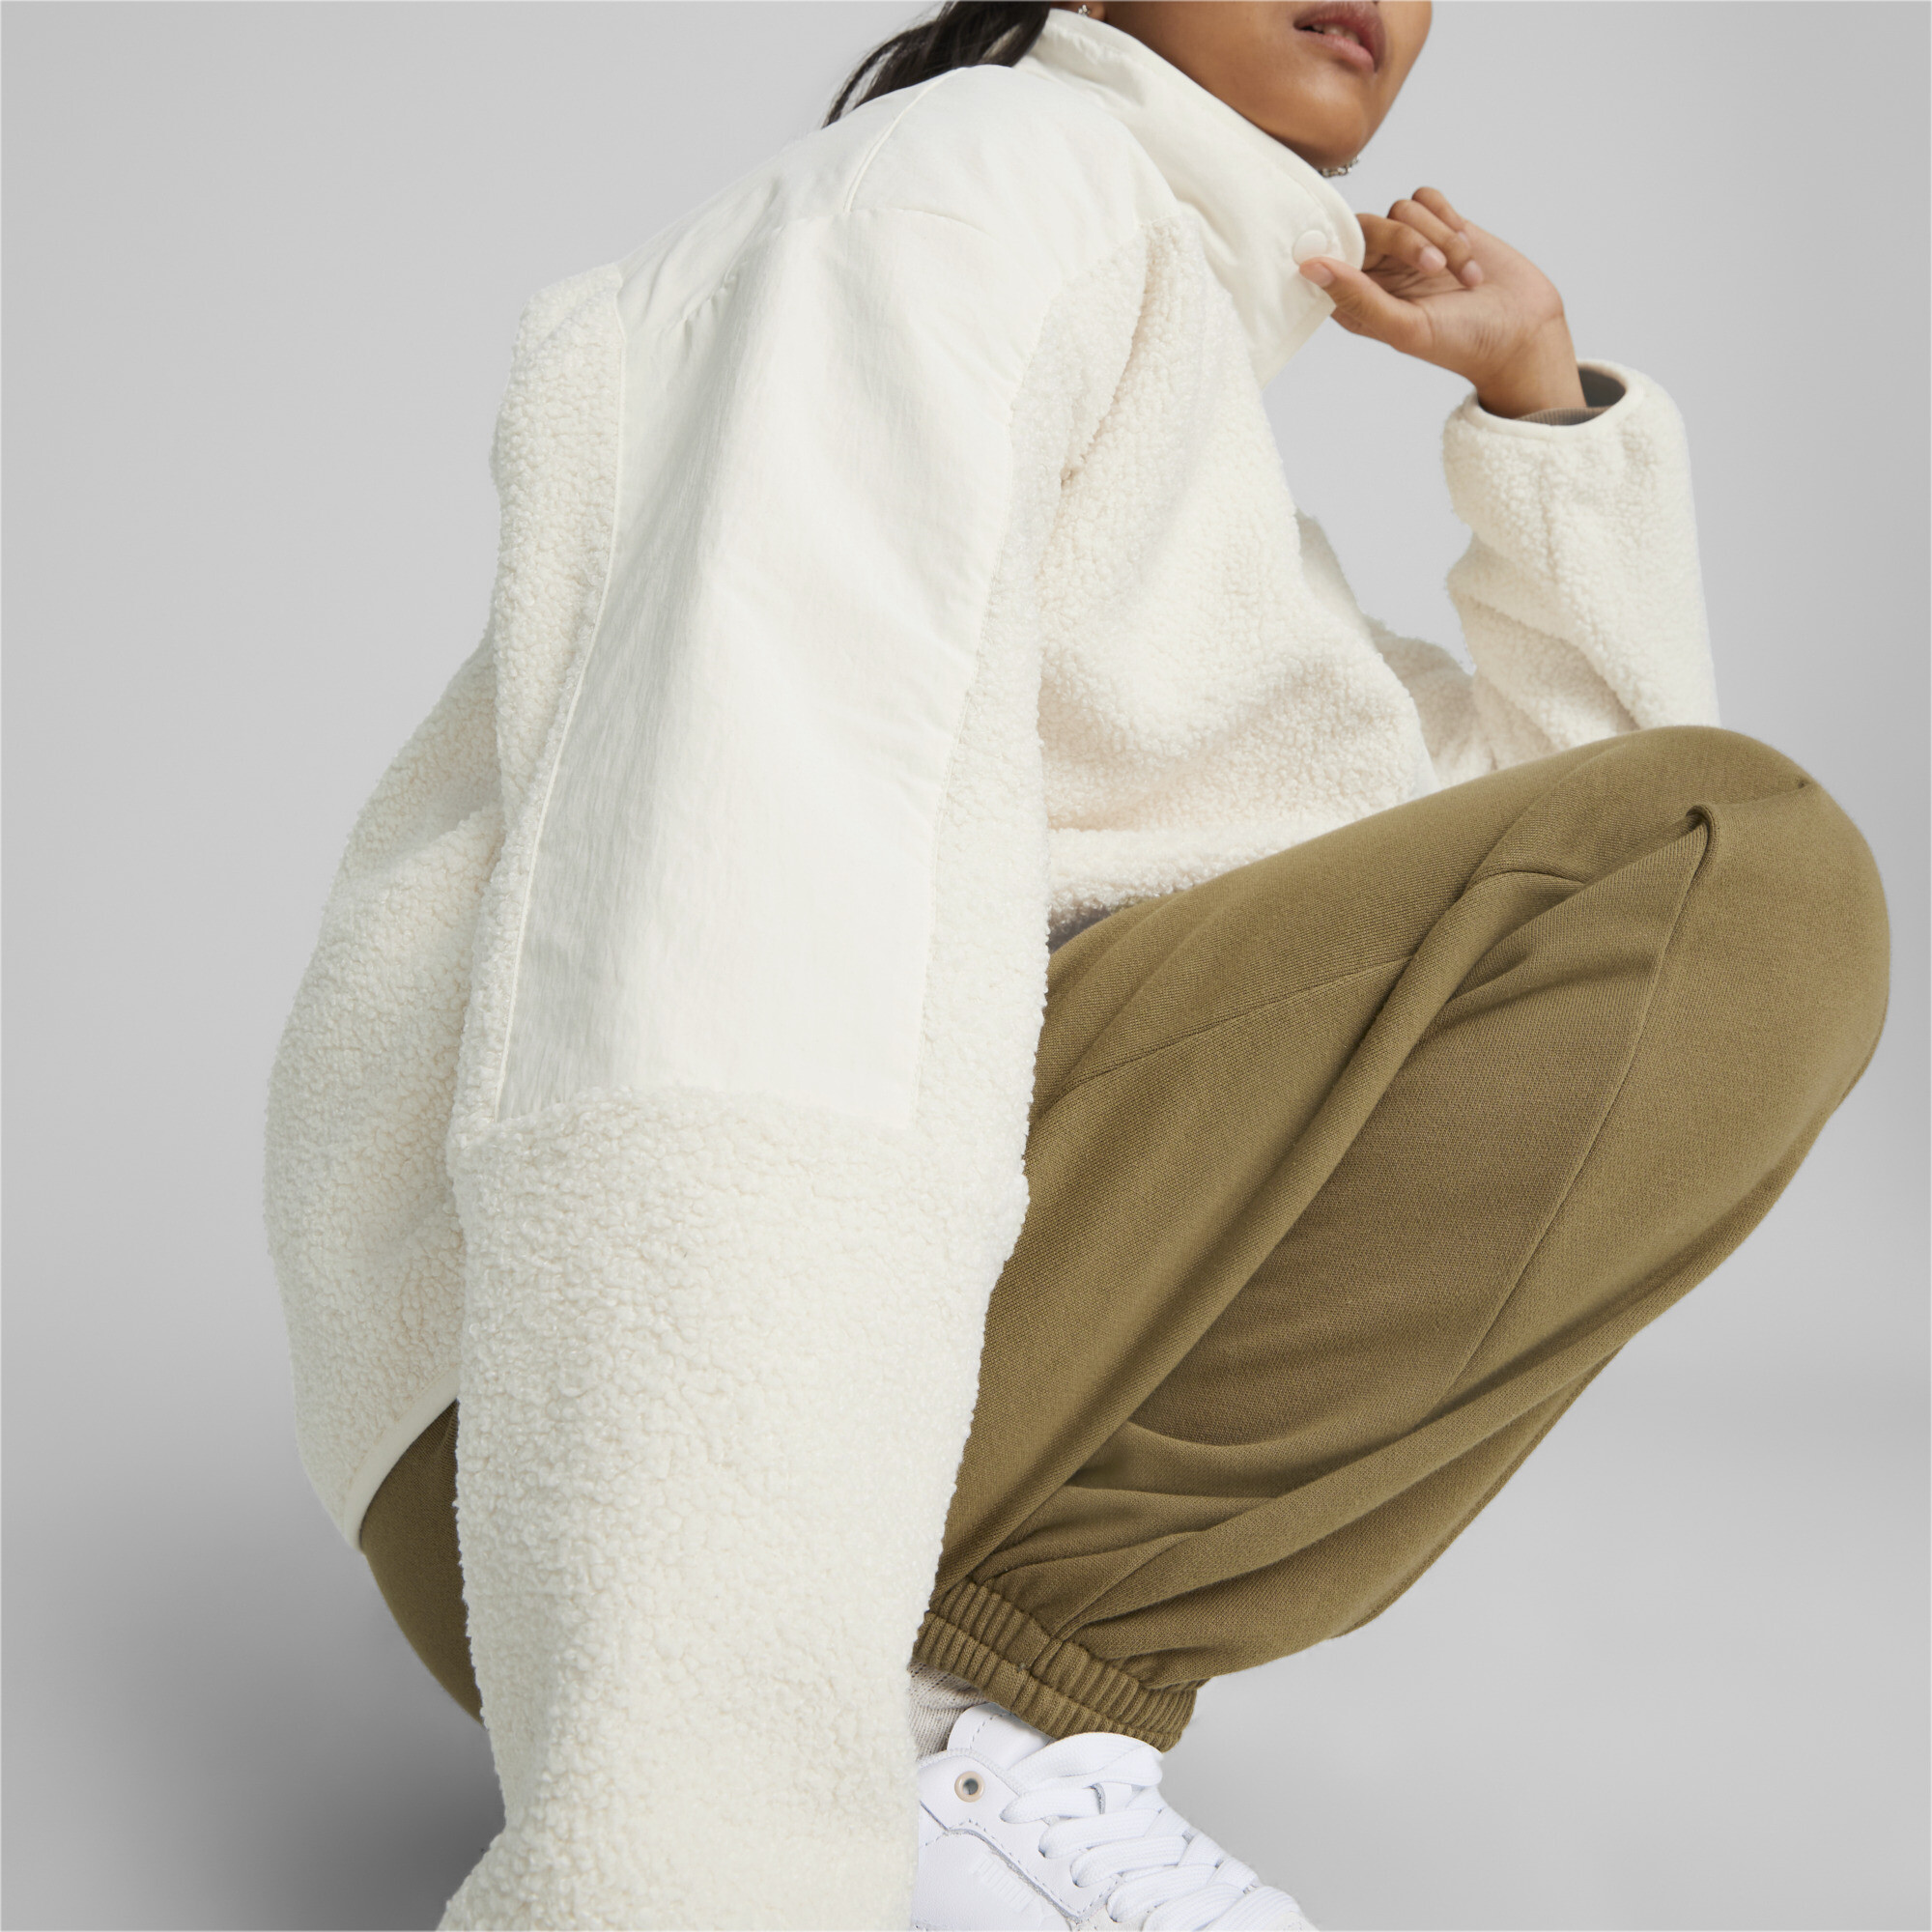 Women's Puma Classics's Sherpa Jacket, White, Size M, Clothing